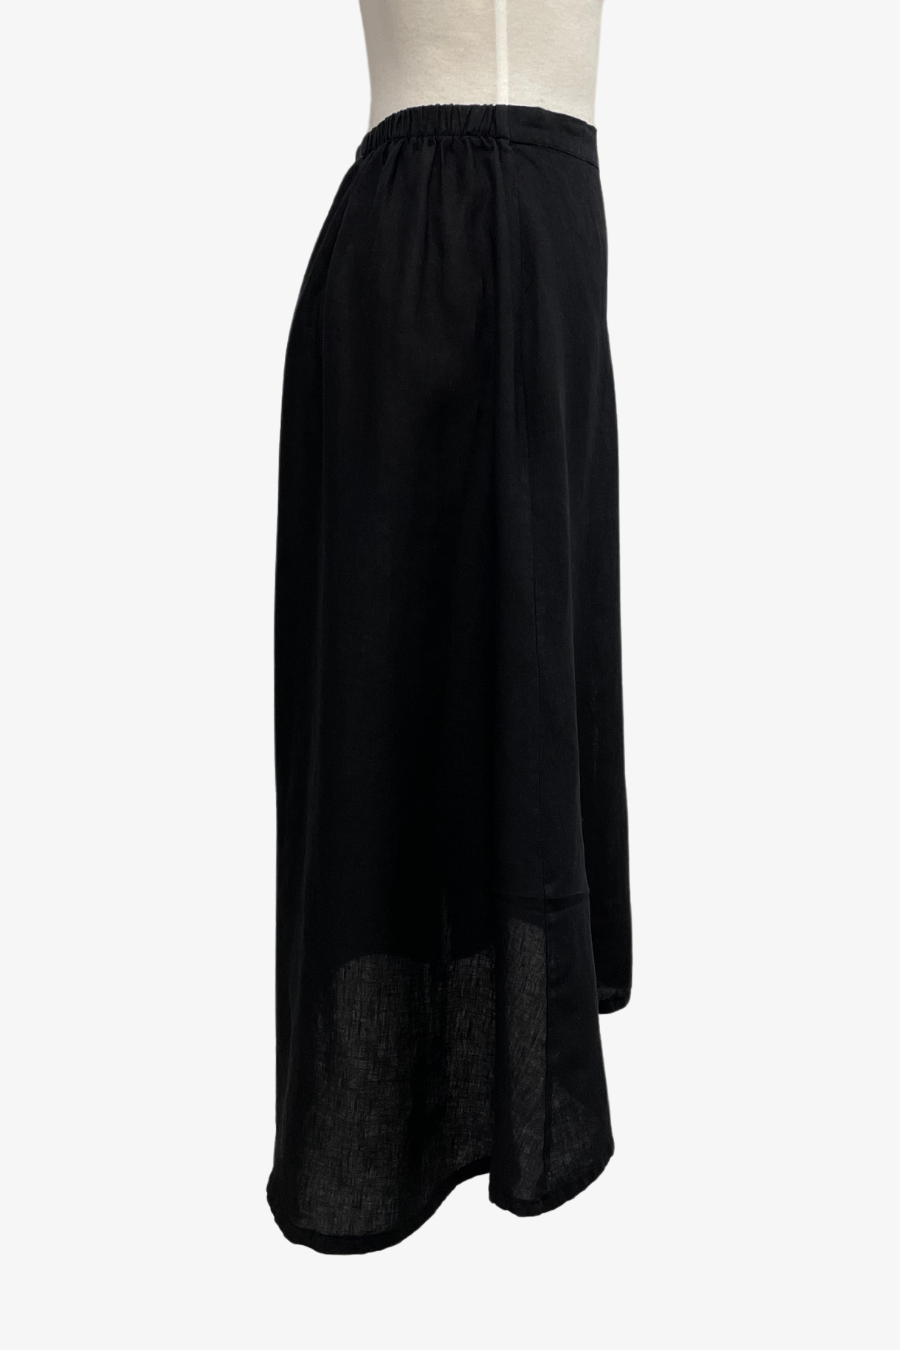 Cinzia High-Low Hem Skirt in Black Linen